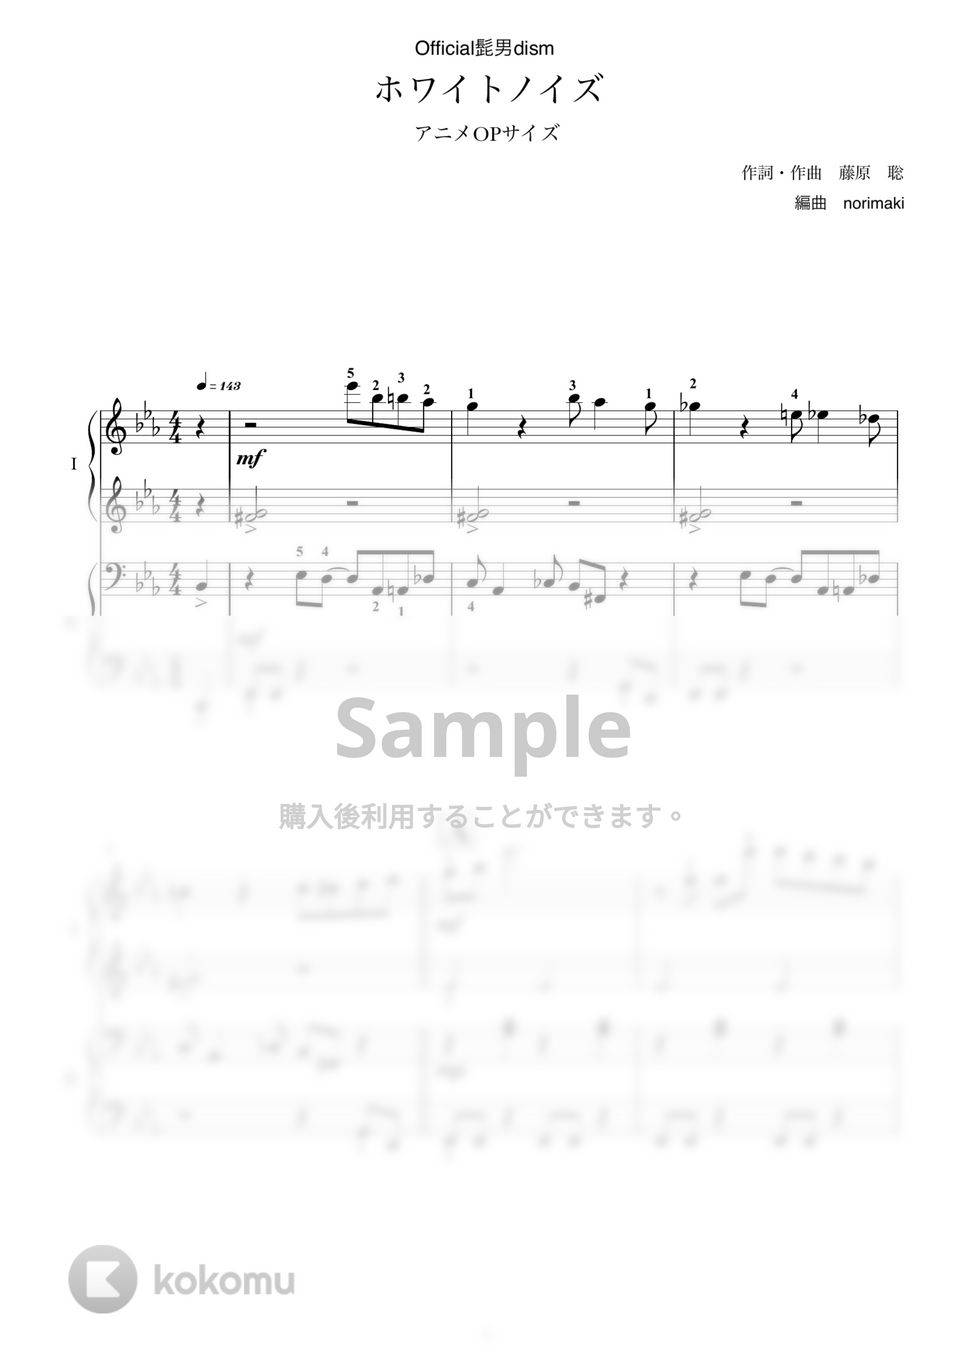 Official髭男dism - ホワイトノイズ（アニメOPサイズ） (ピアノ連弾/東京リベンジャーズ) by norimaki